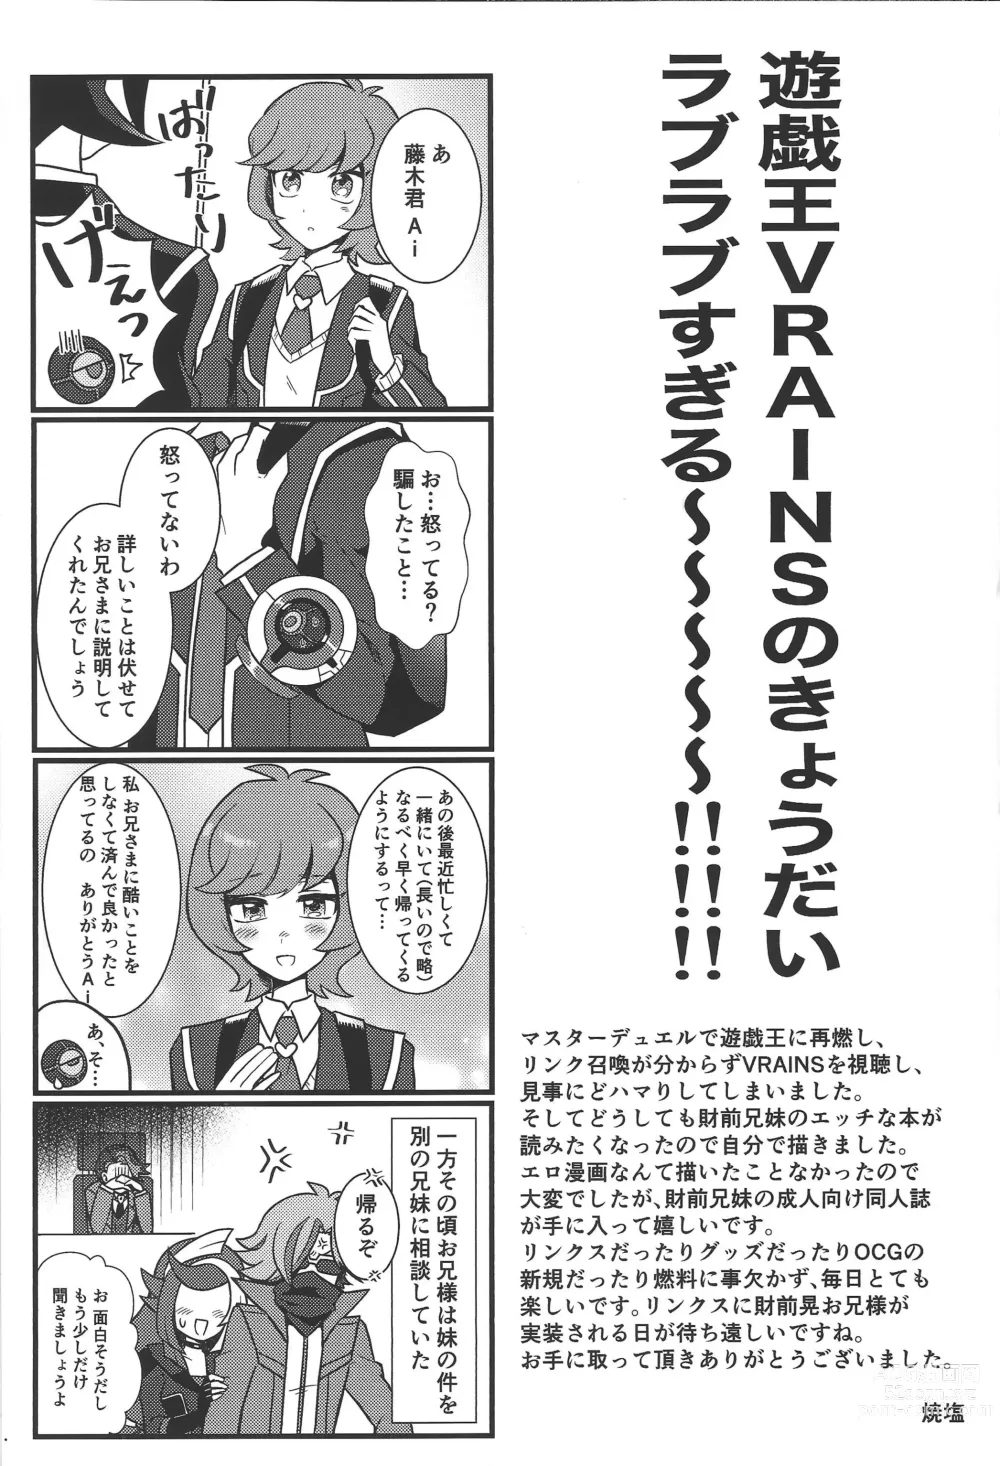 Page 31 of doujinshi Onii-sama to Yume Ochi SEX Virtual Hen